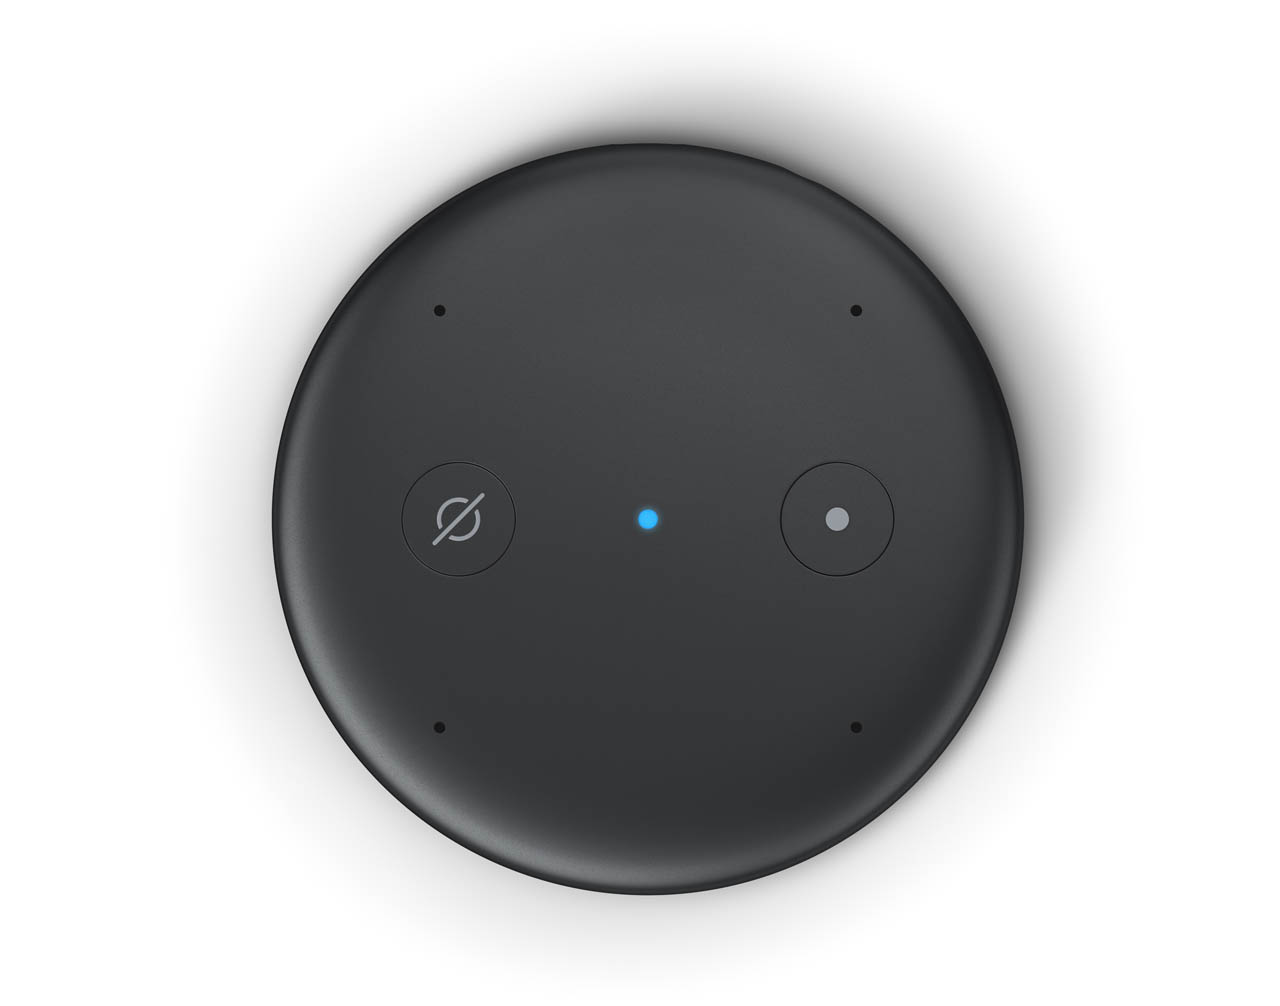 Amazon Echo Input Alexa